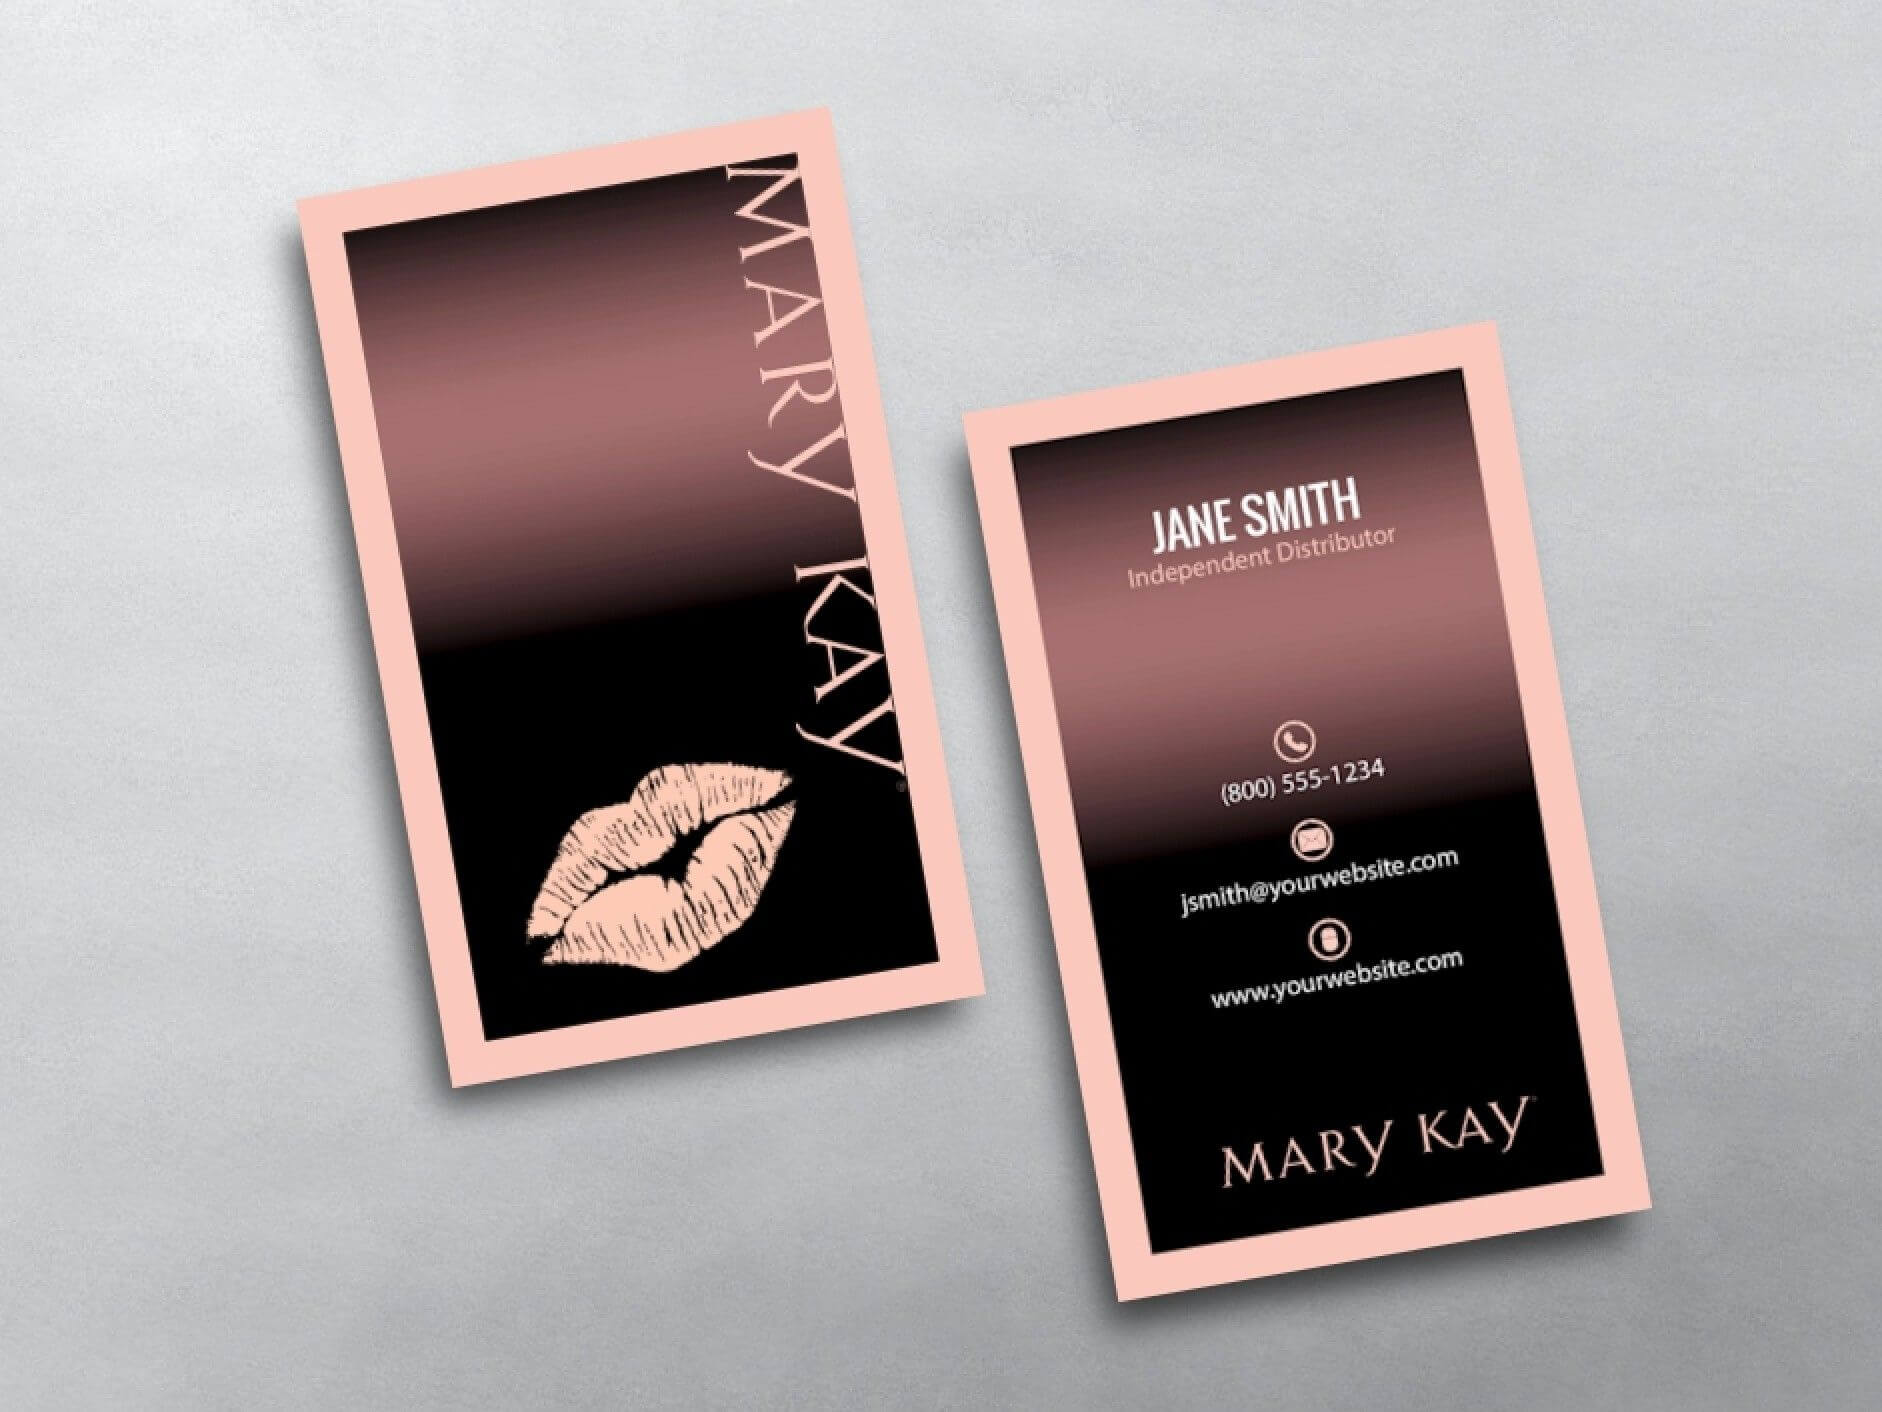 Mary Kay Business Cards | Pink Dreams | Mary Kay, Mary Kay Within Mary Kay Business Cards Templates Free